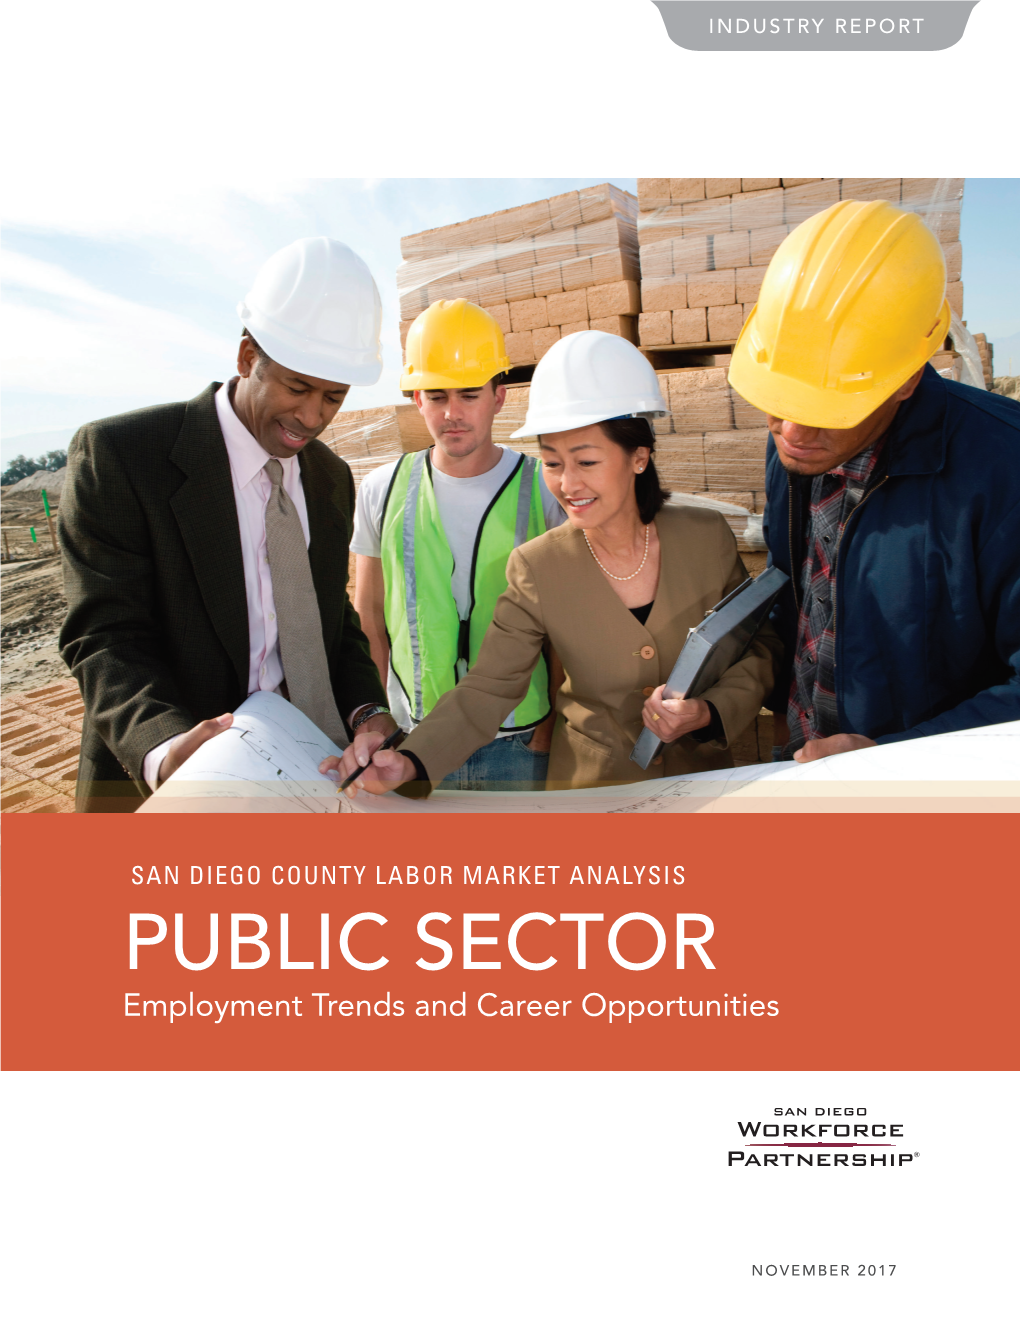 Labor Market Analysis: Public Sector